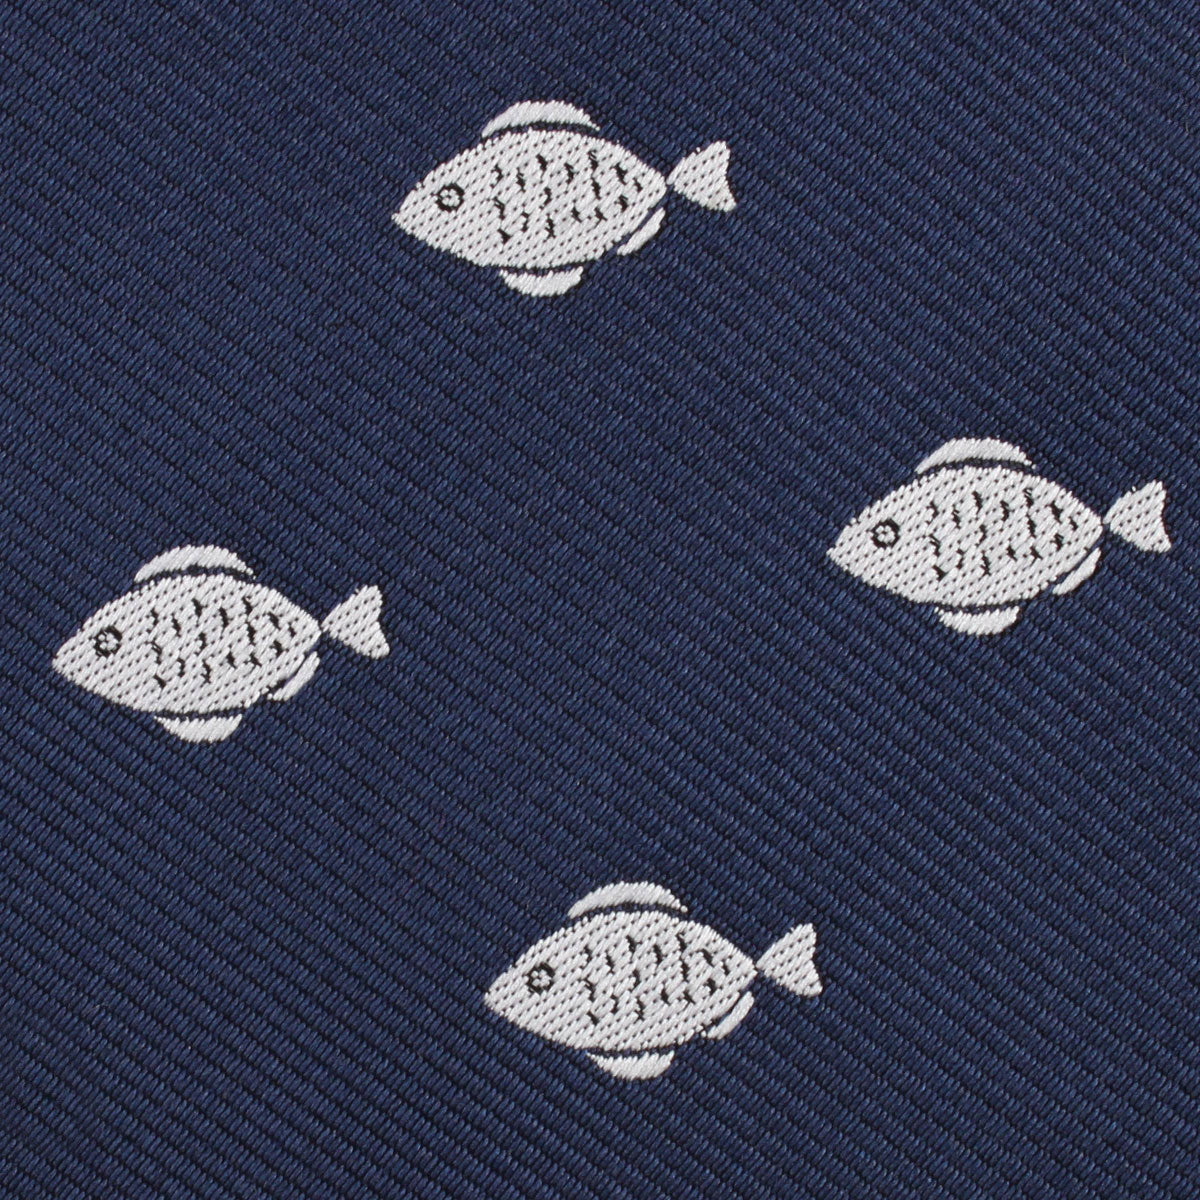 Deep Sea Fish Fabric Skinny Tie